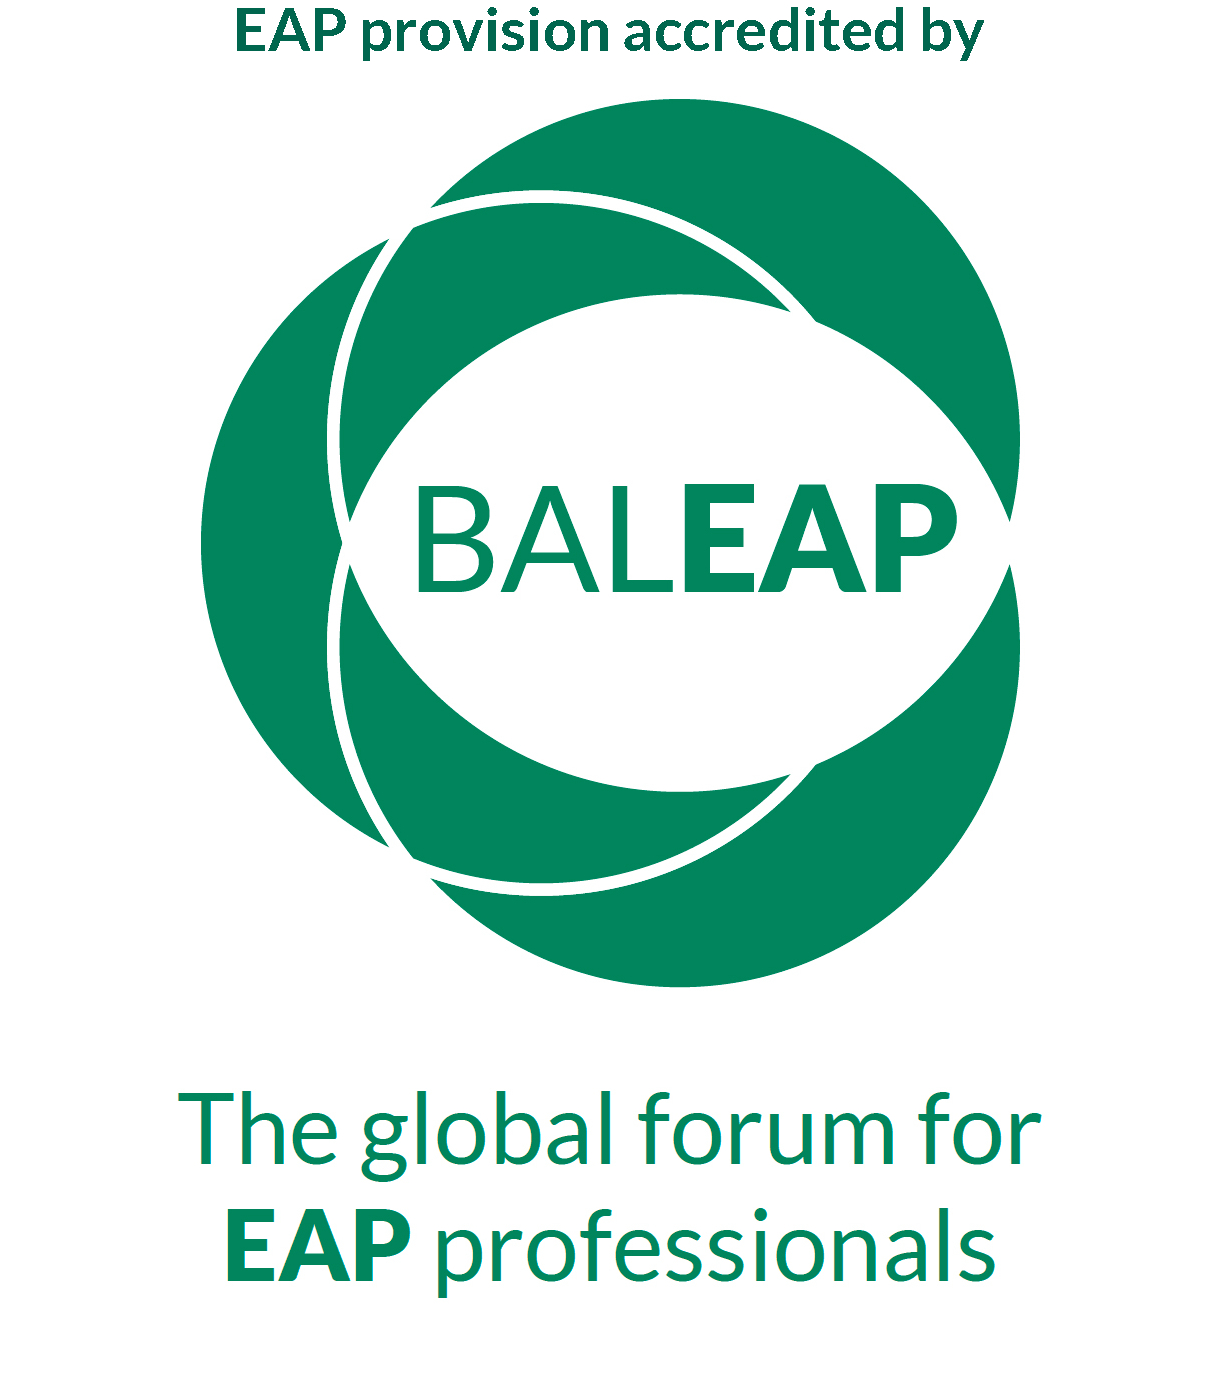 BALEAP accreditation logo